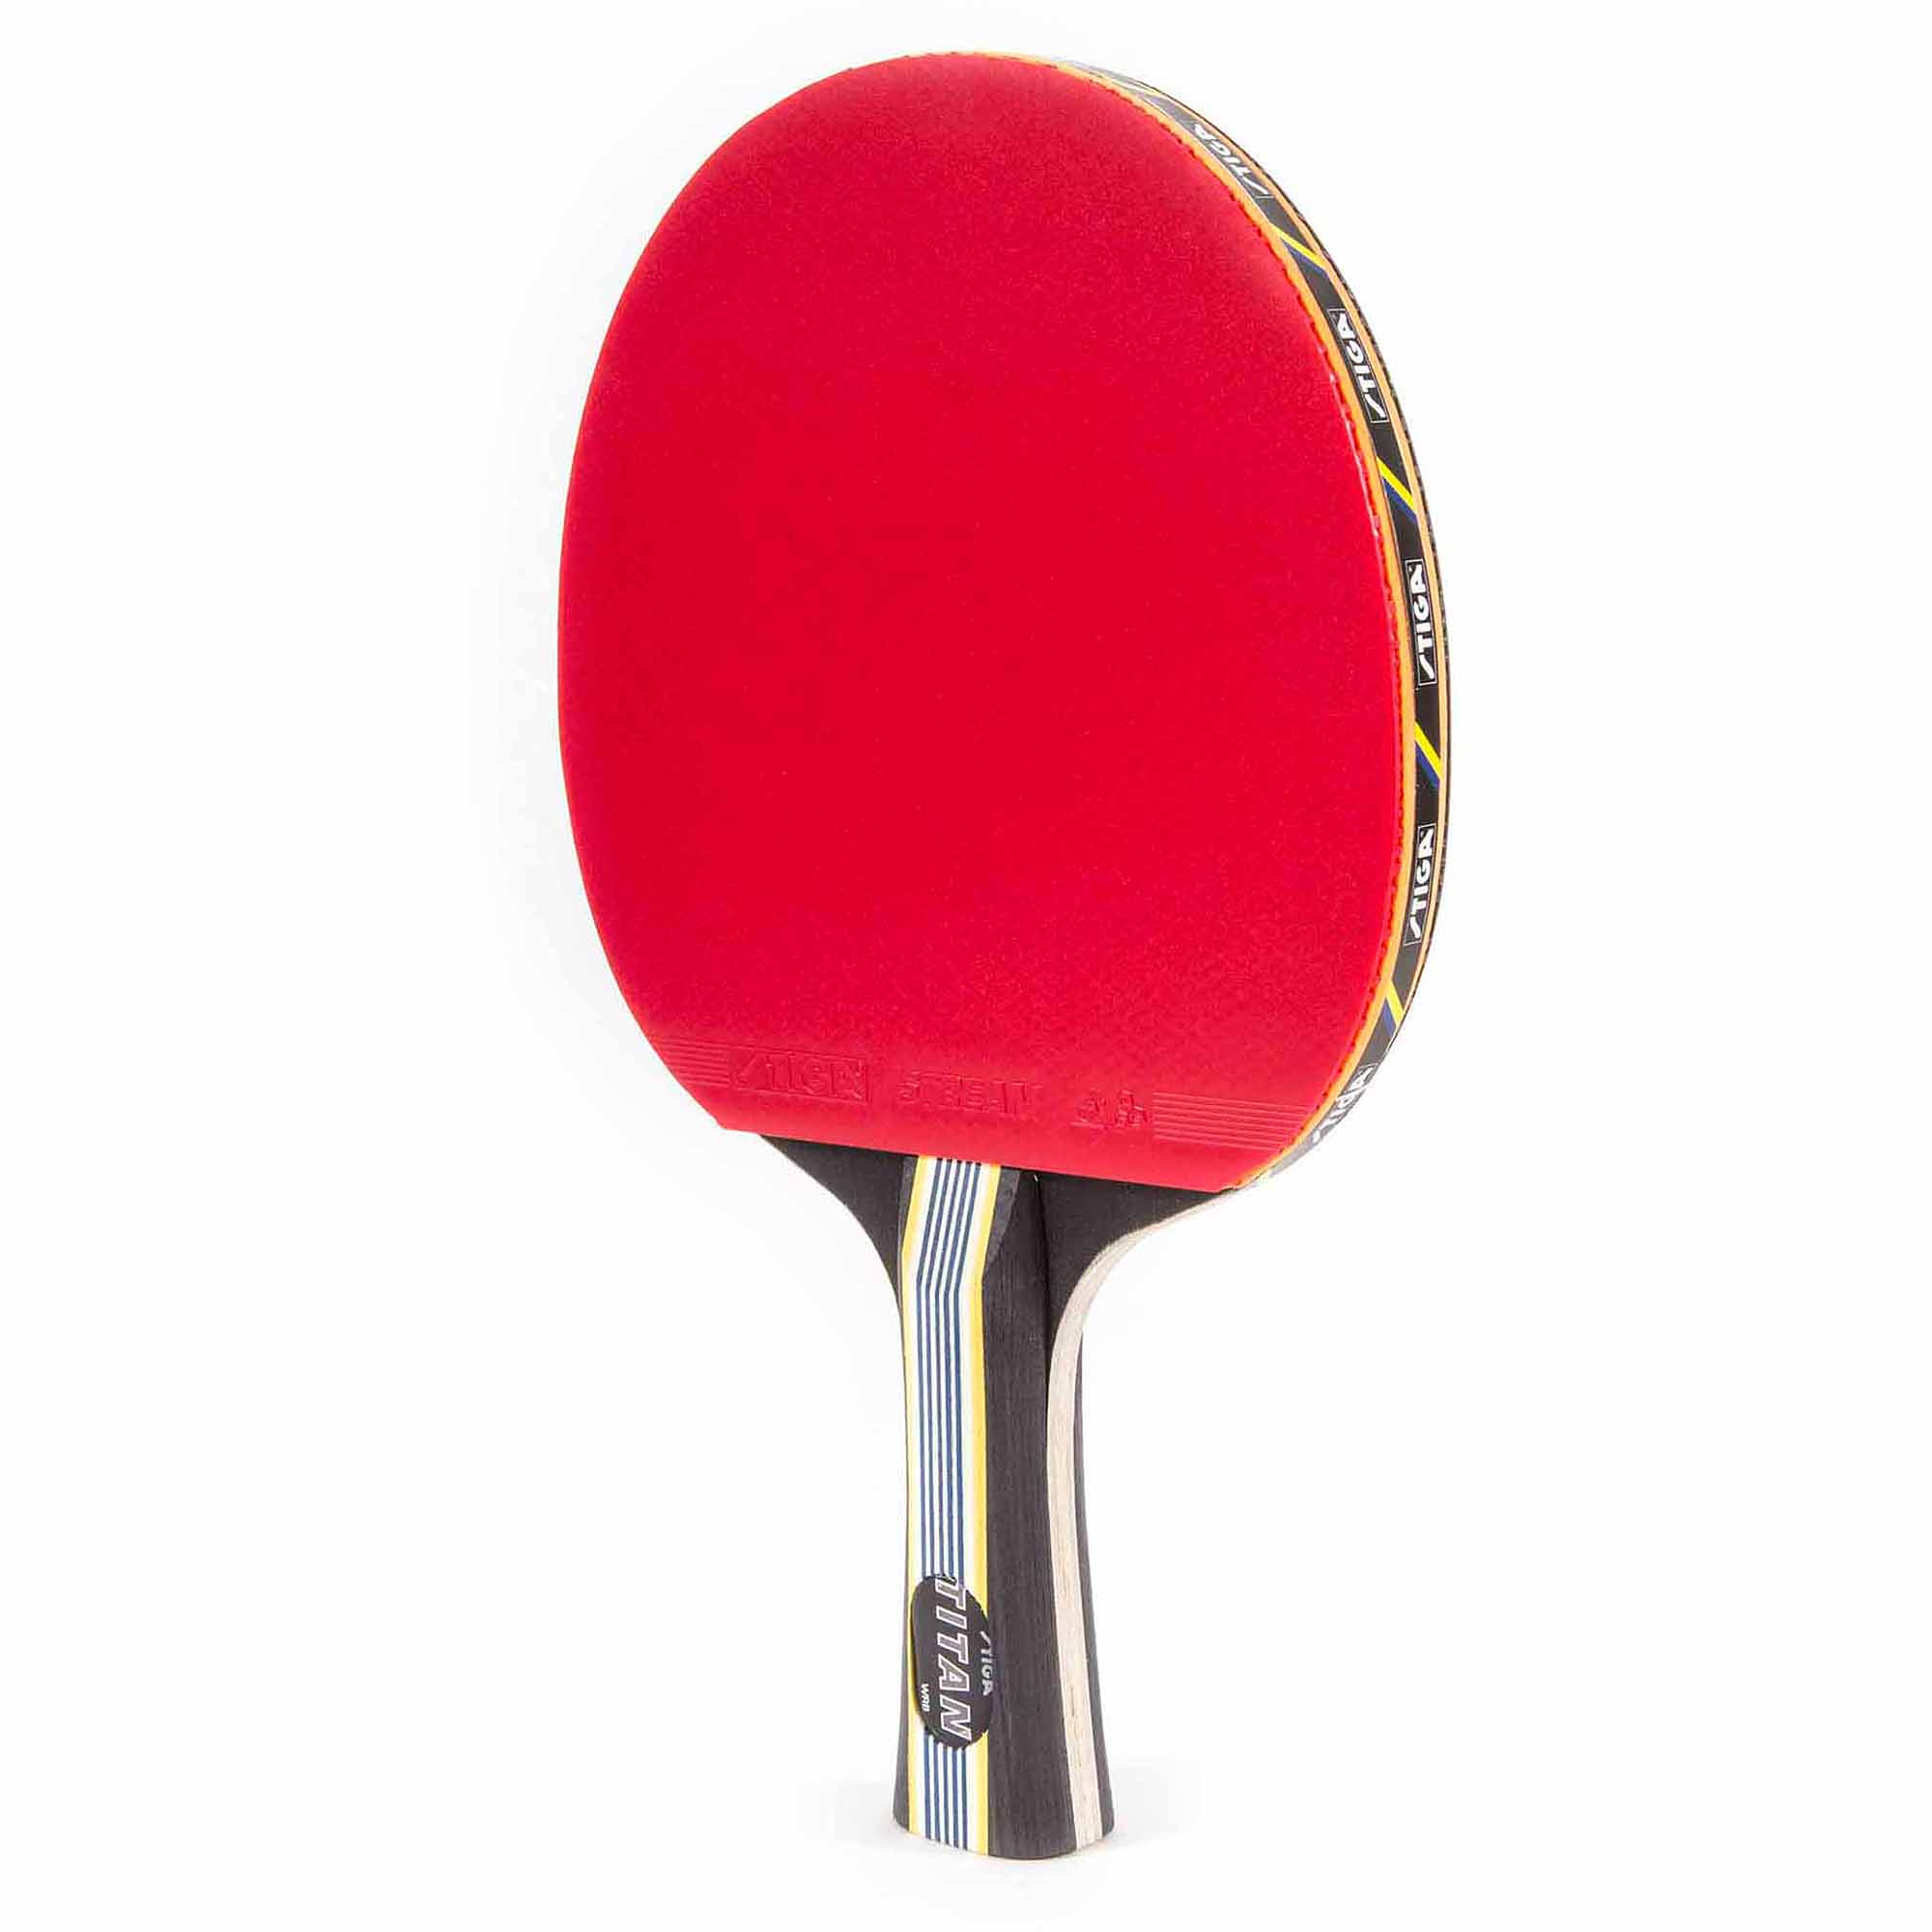 STIGA Titan Table Tennis Racket - Walmart.com